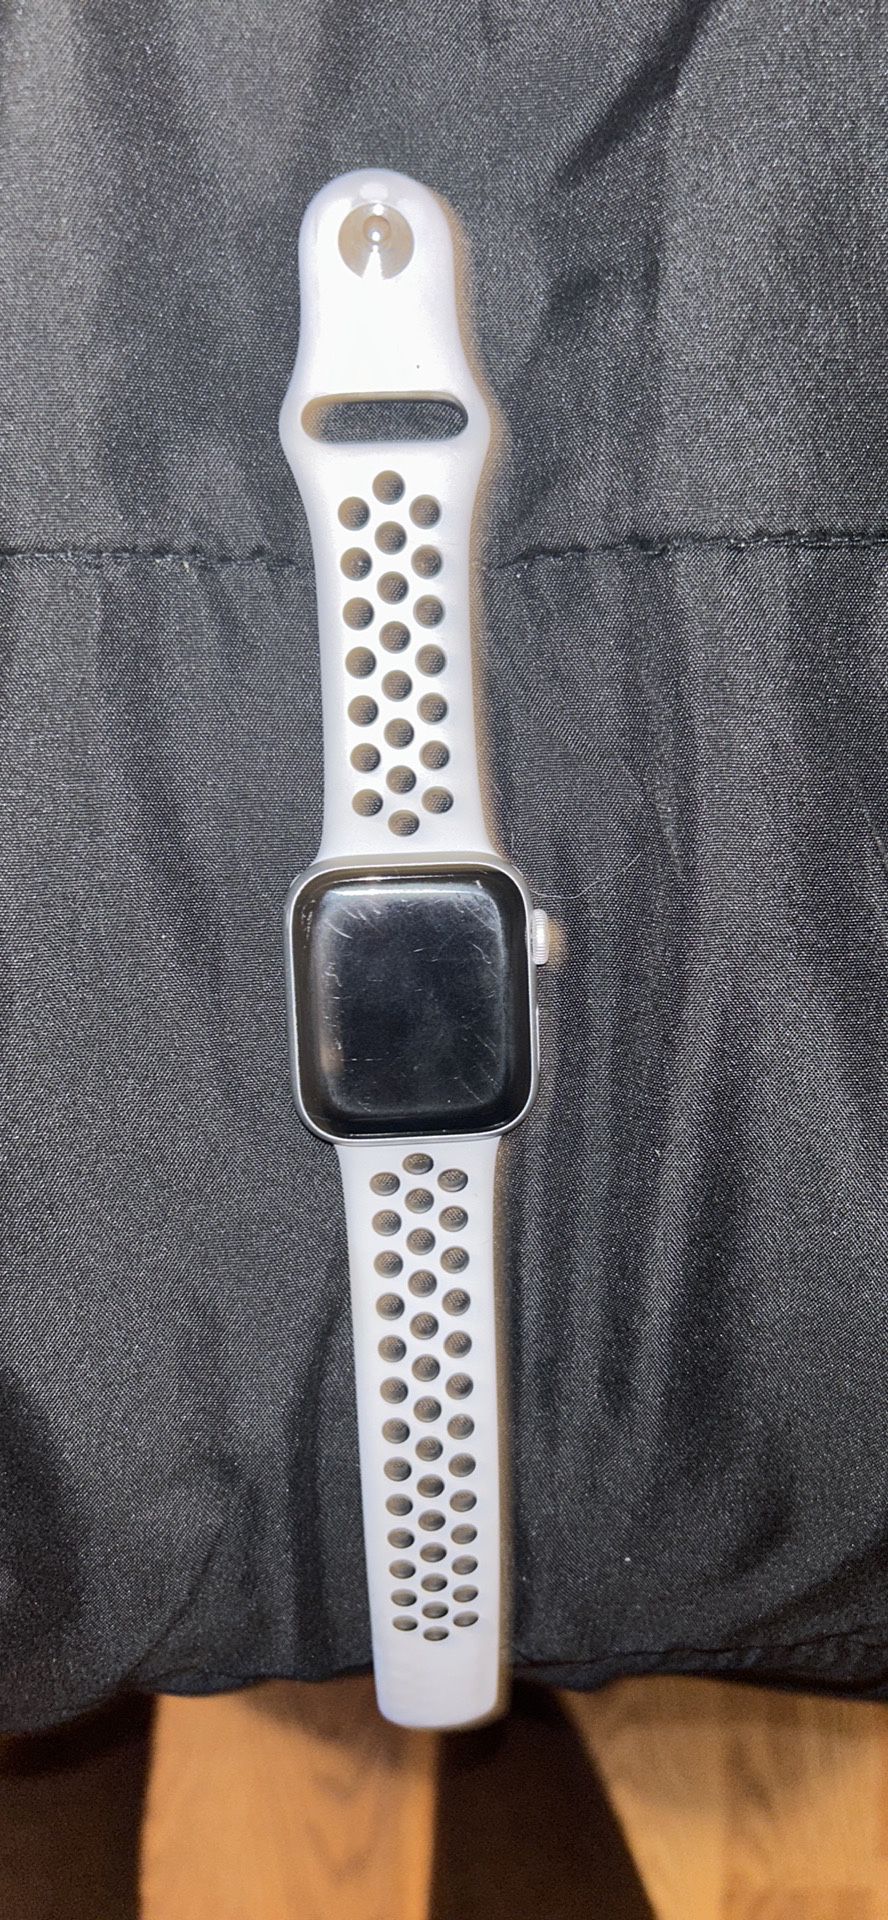 Nike Apple Watch Series 4 (GPS+ Cellular)